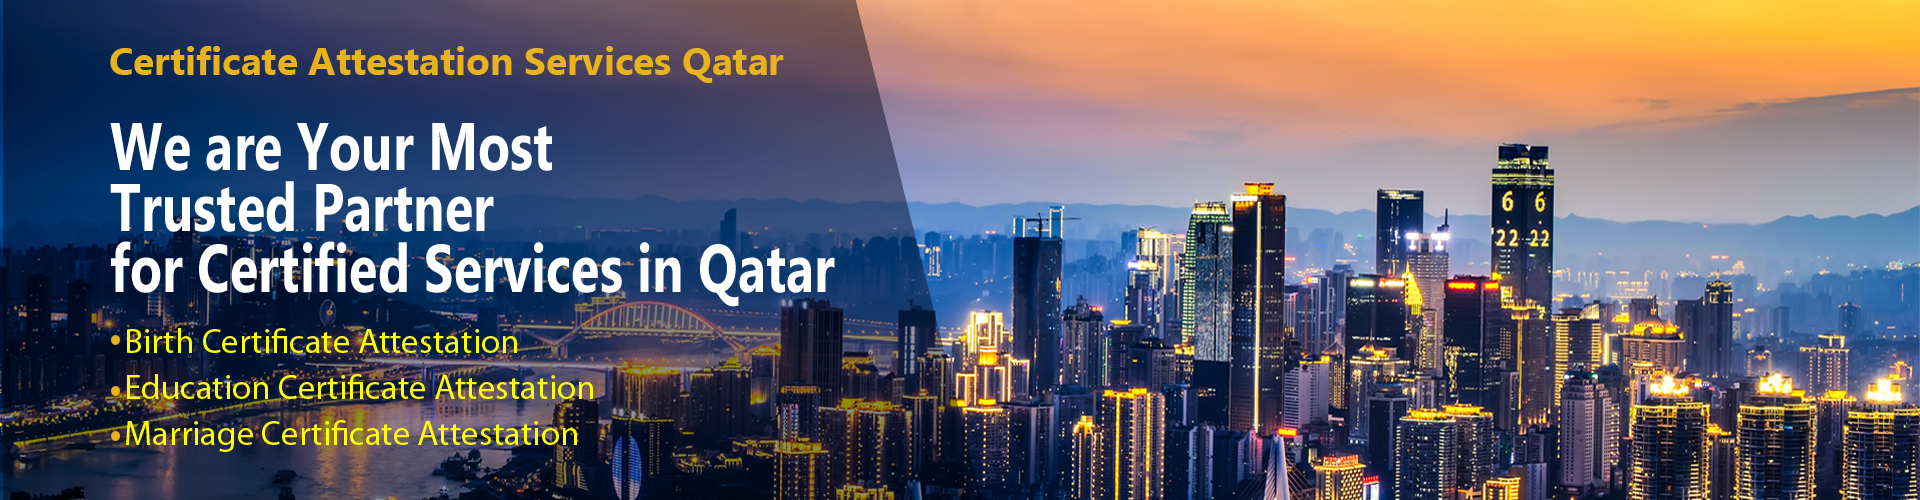 engineering certificate attestation in qatar